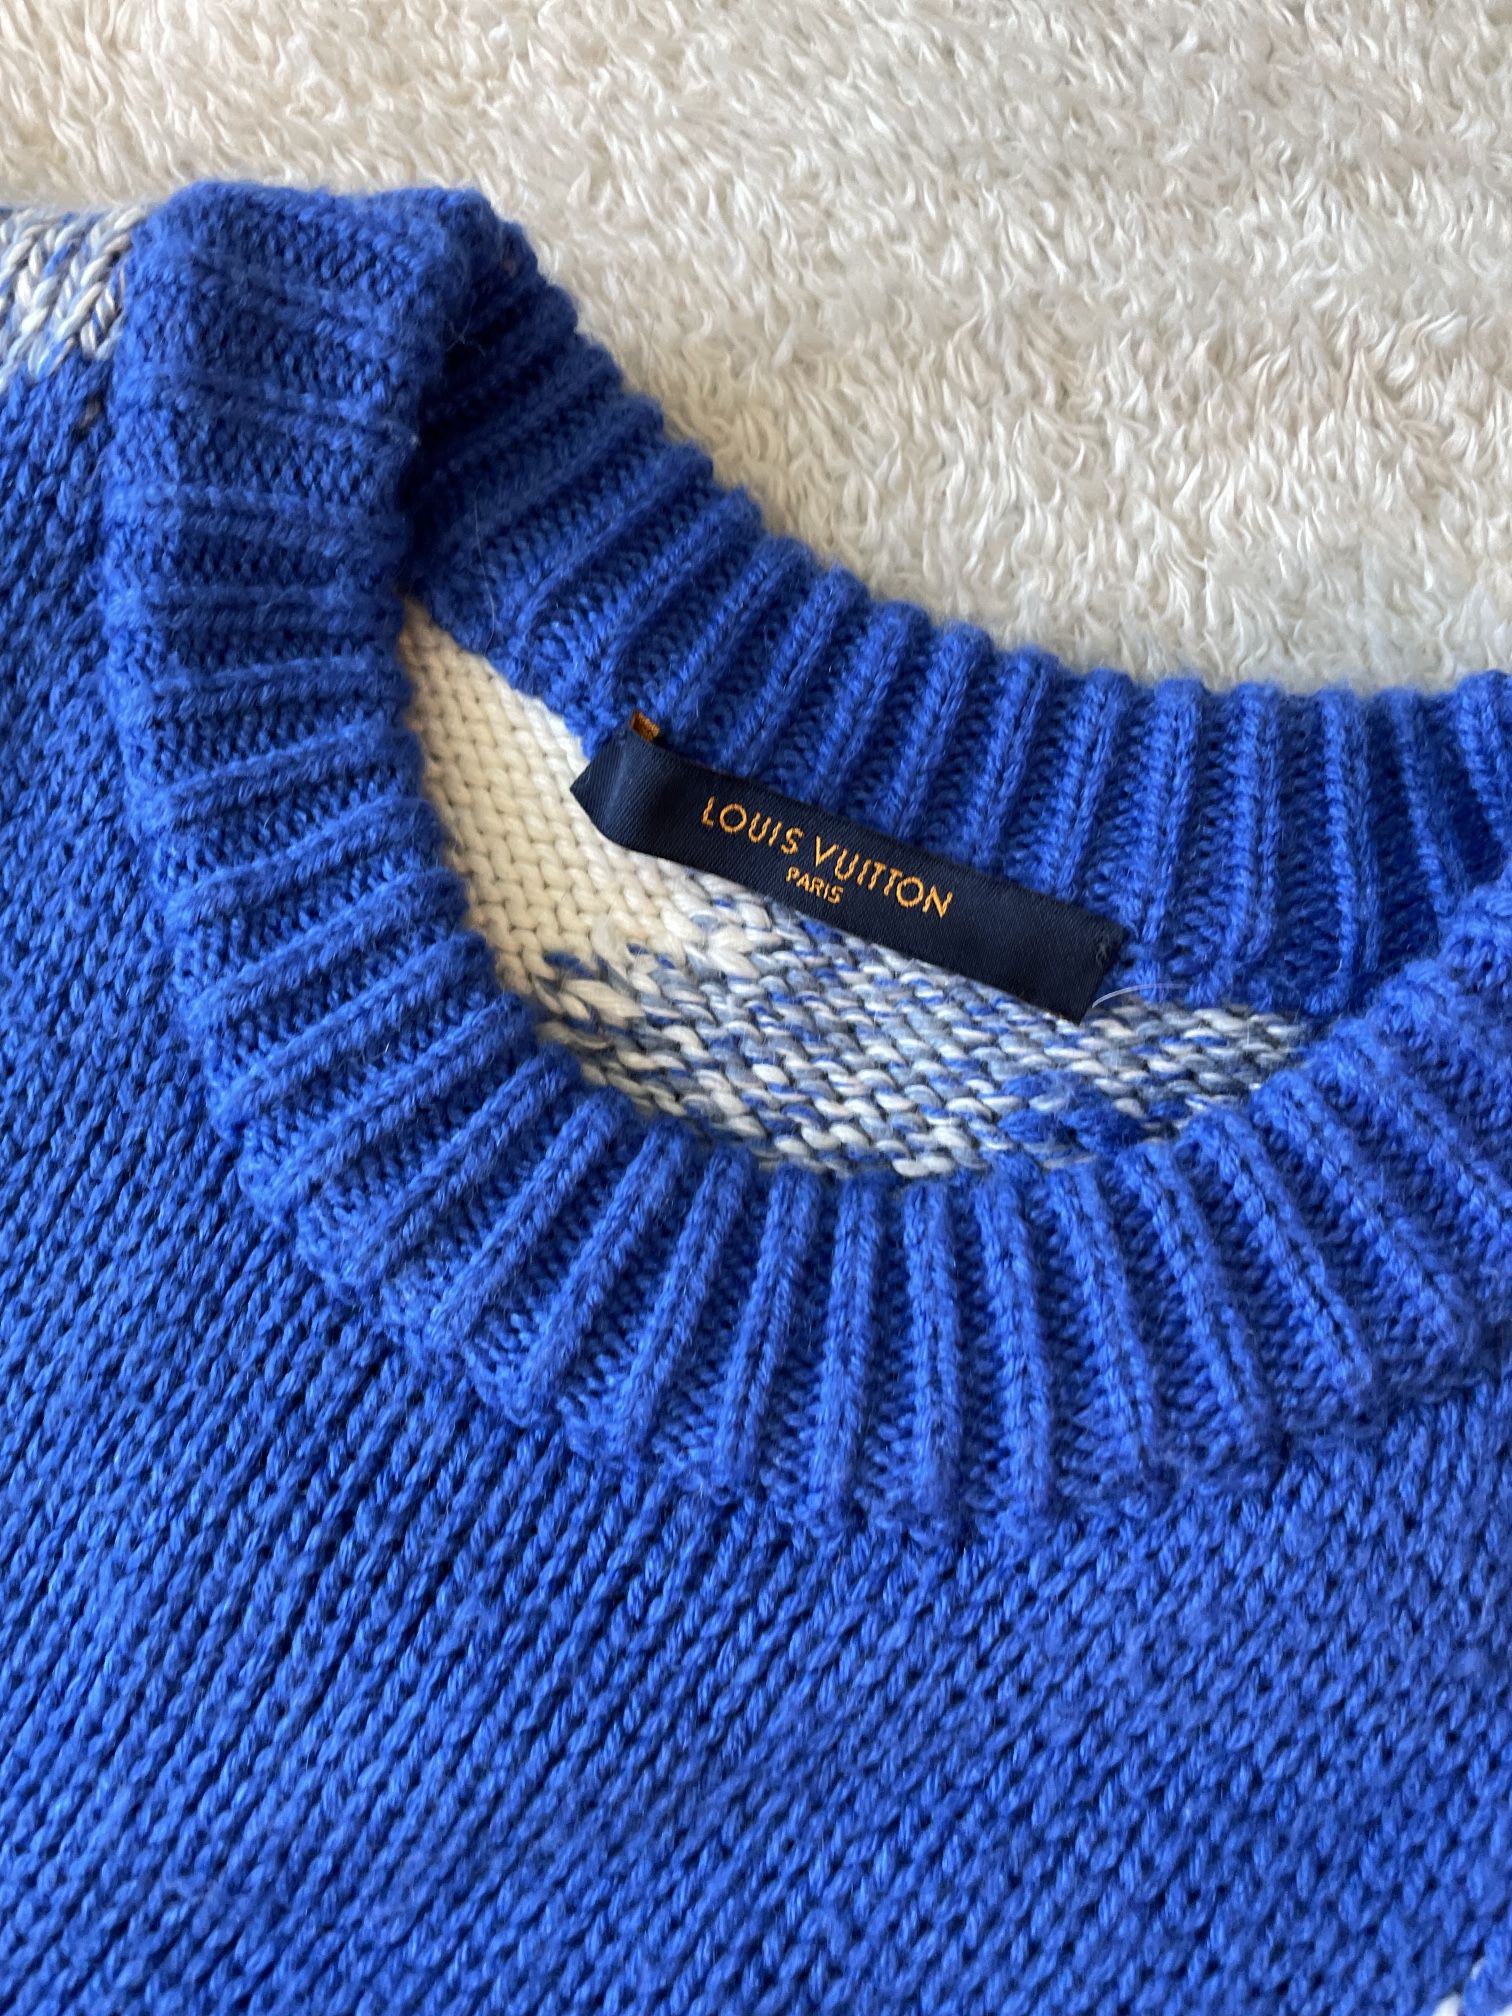 louis vuitton blue knit sweater